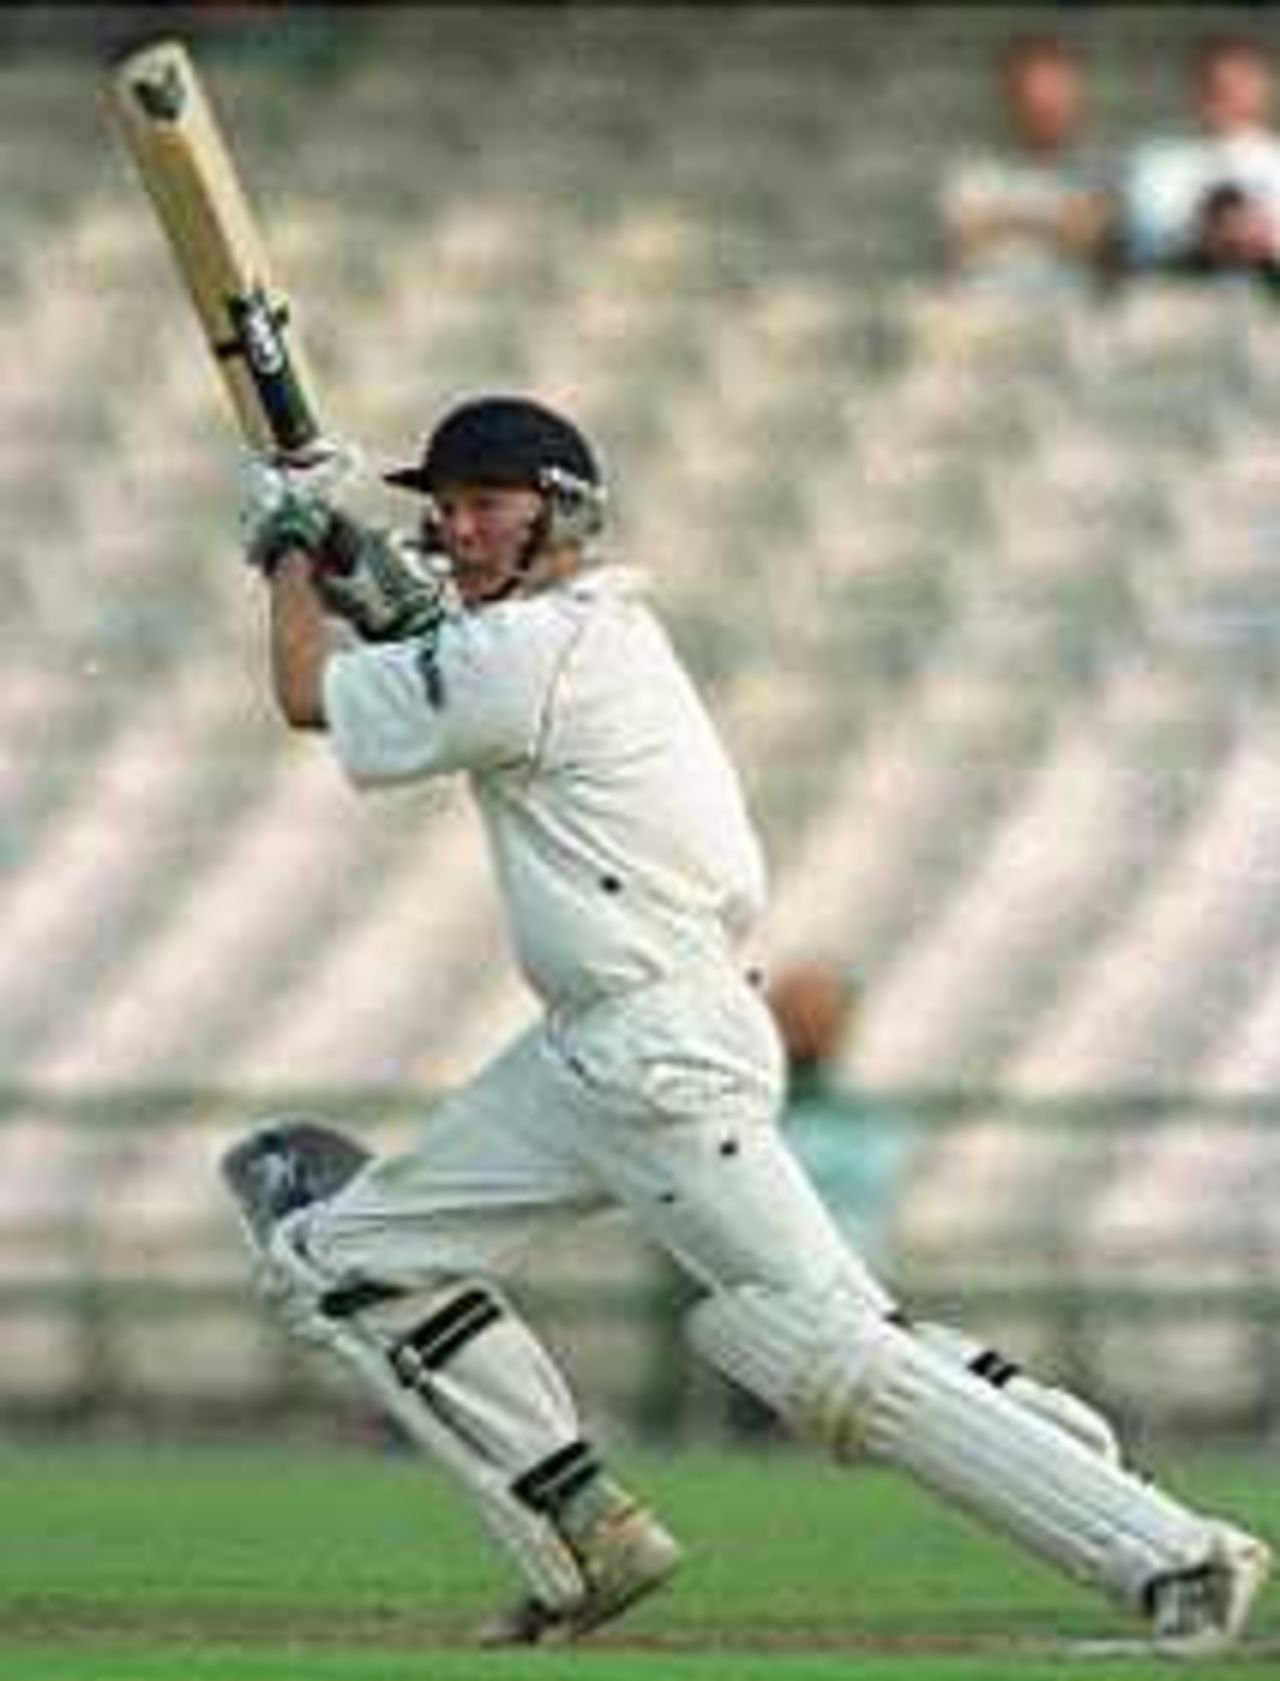 Chris Schofield in batting action, County Championship, Lancashire v Durham, 1-4 September 1999